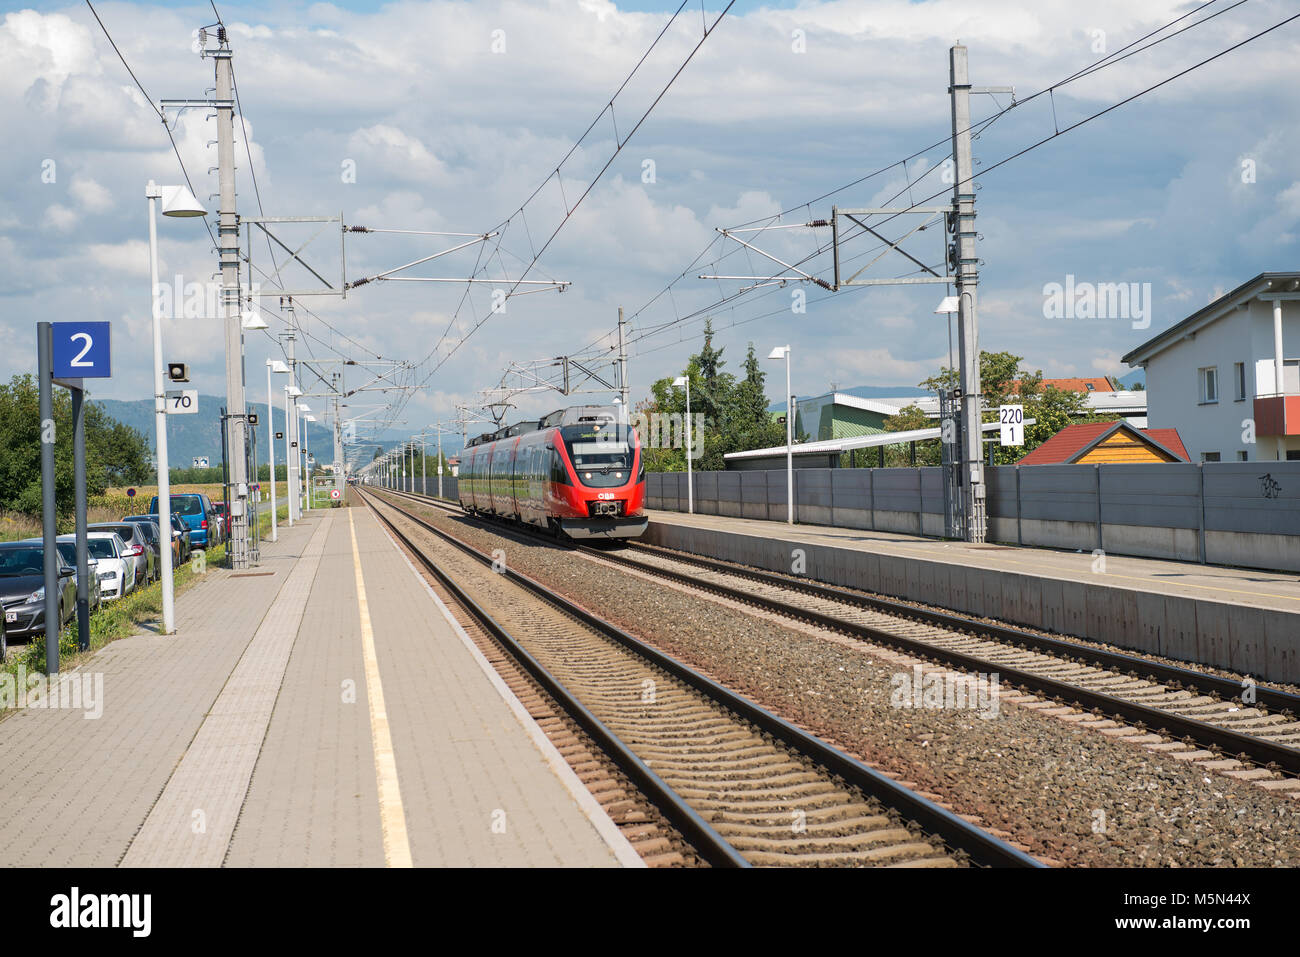 Train tracks and station at Flughafen Graz Feldkirchen with perron Stock Photo